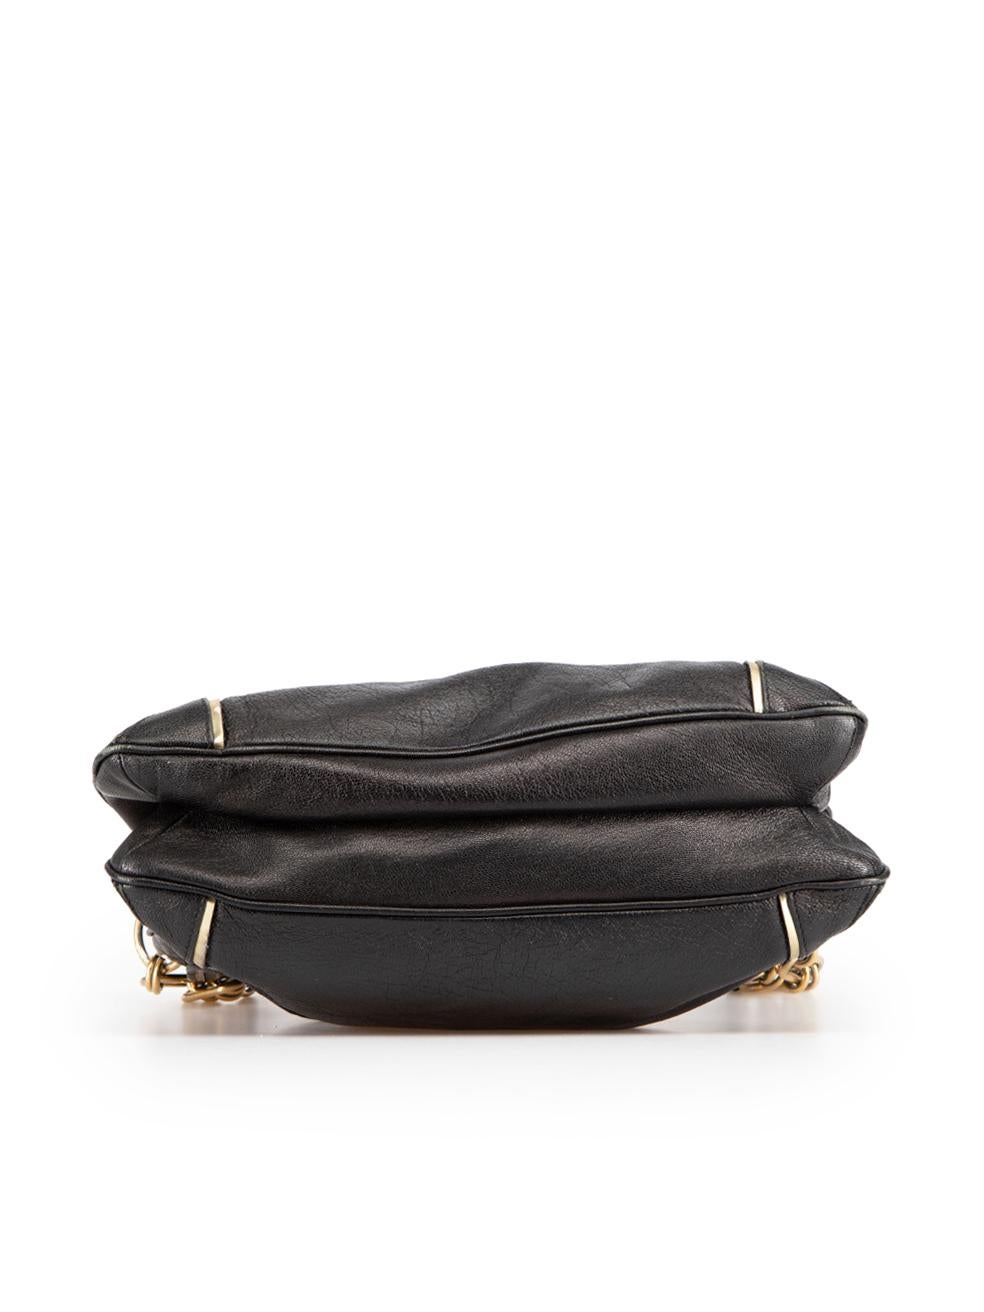 Women's Anya Hindmarch Black Leather Shoulder Bag